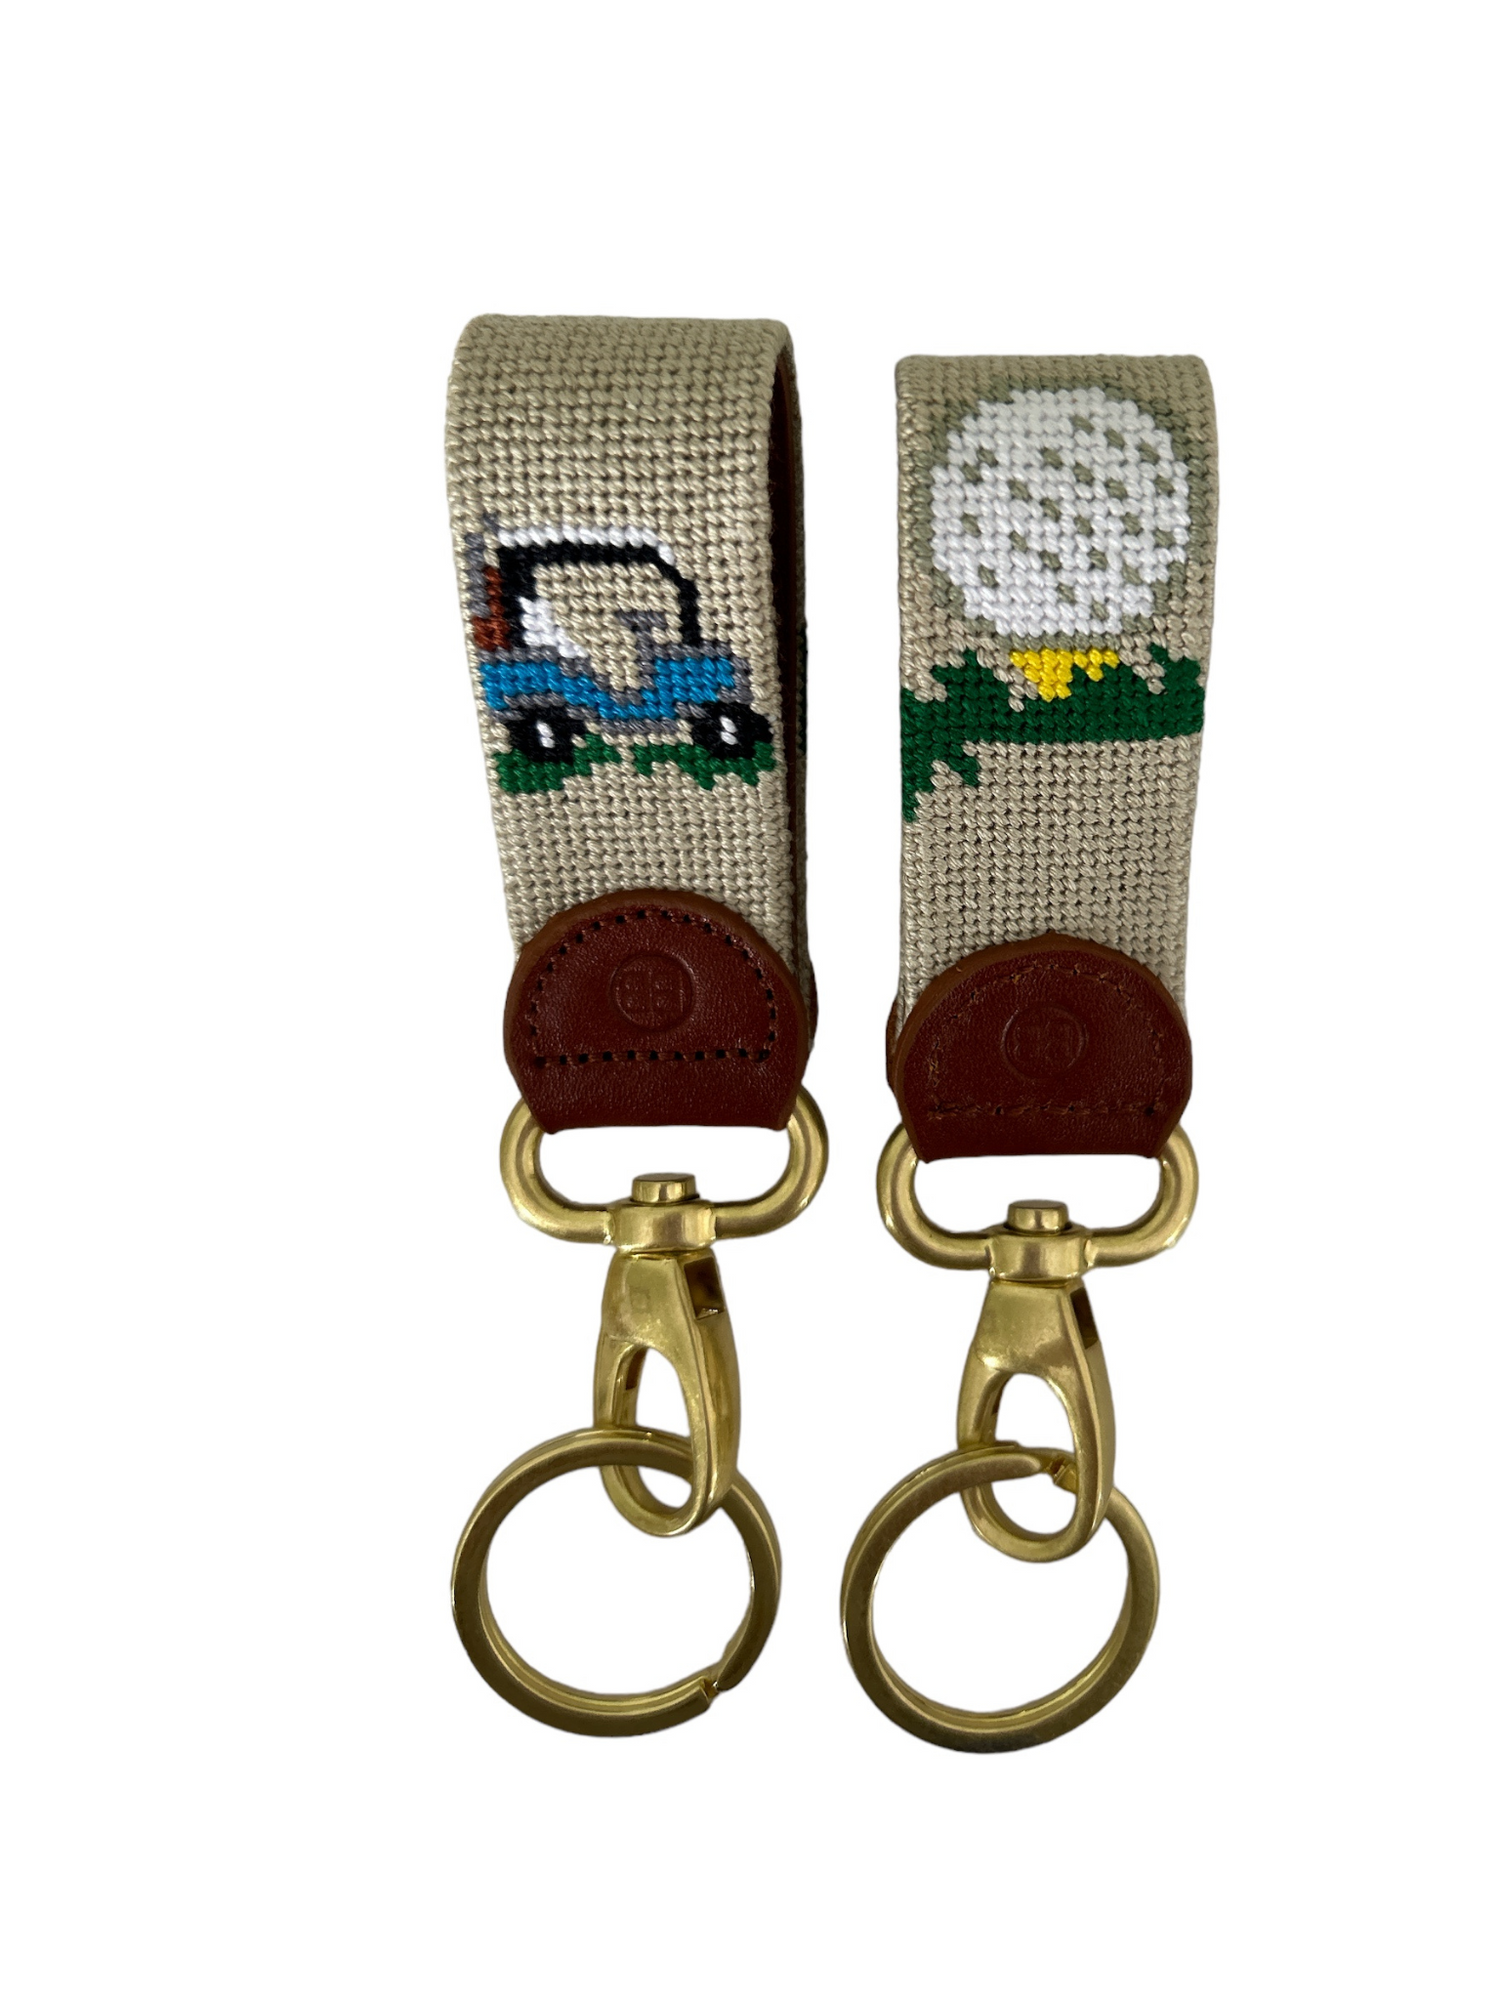 Needlepoint Key Fob , Golf keychain with brass lobster clasp